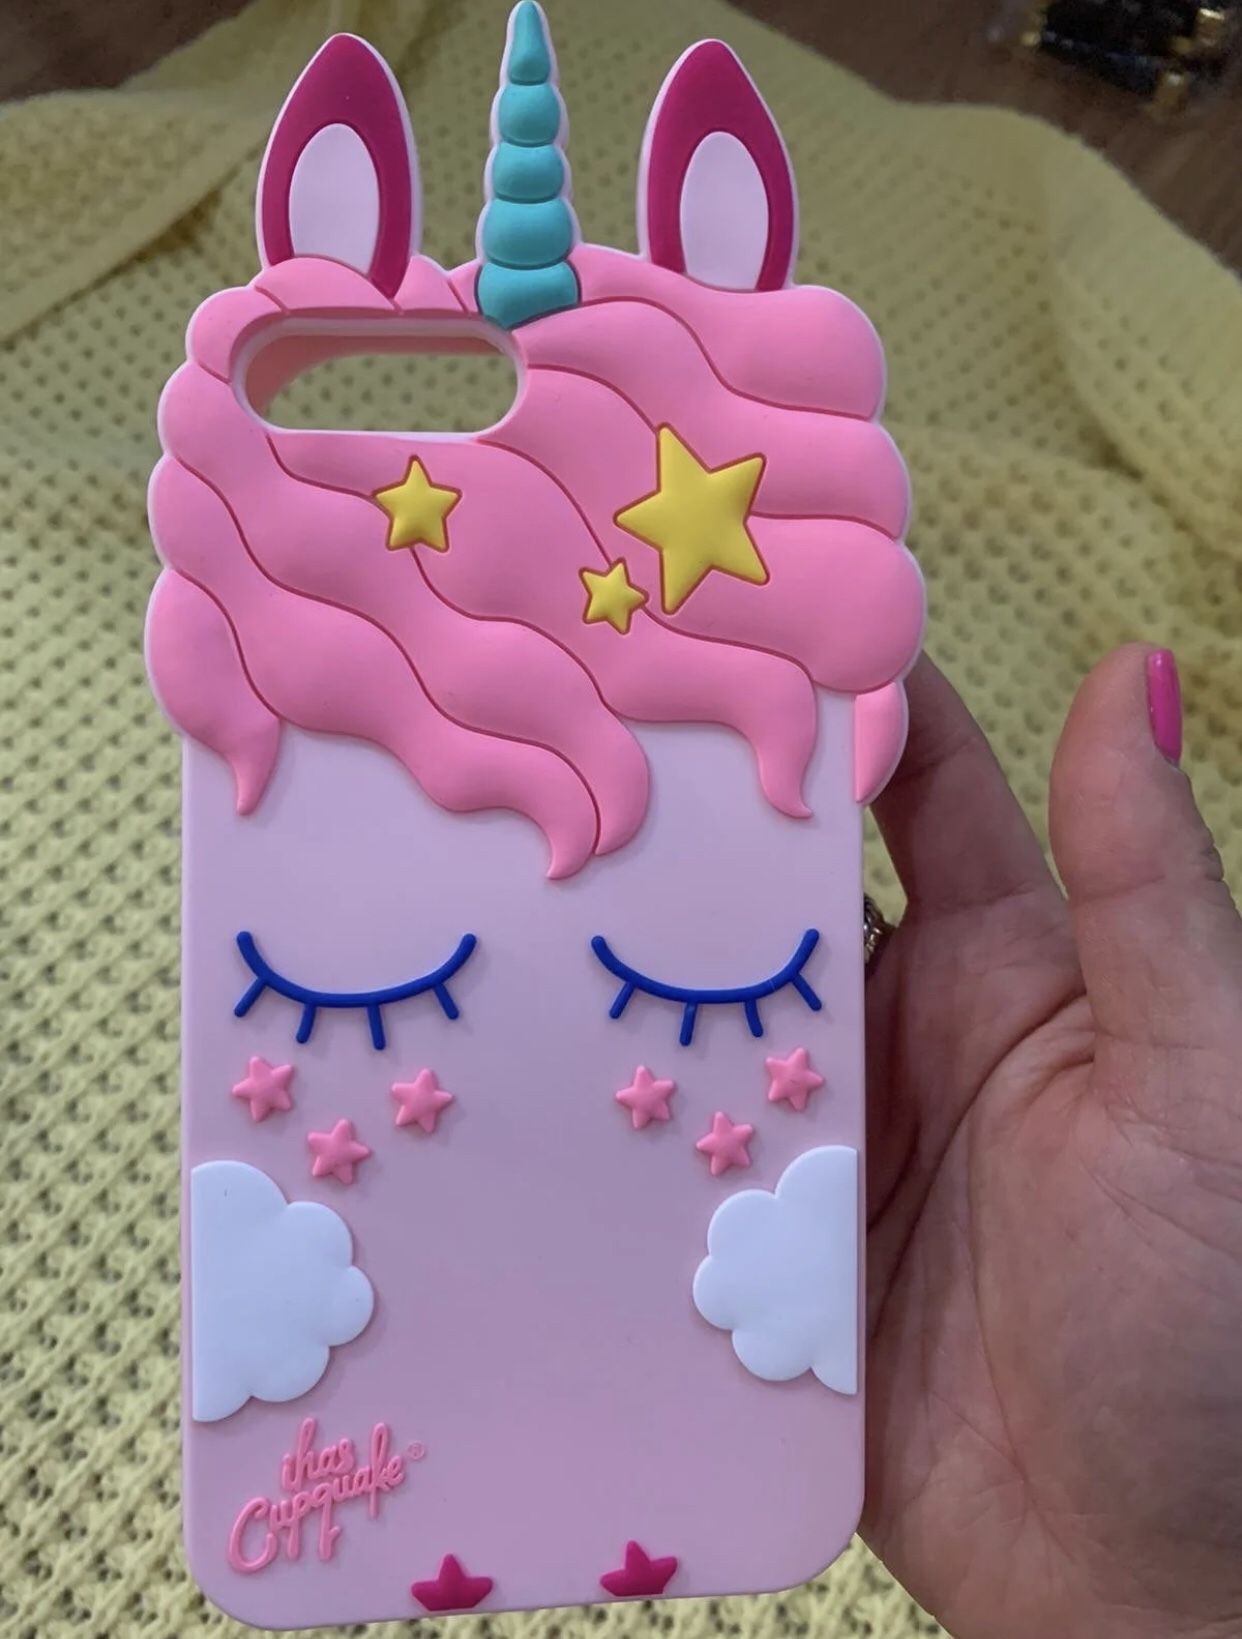 Iphone 6/7/8 plus case jelly